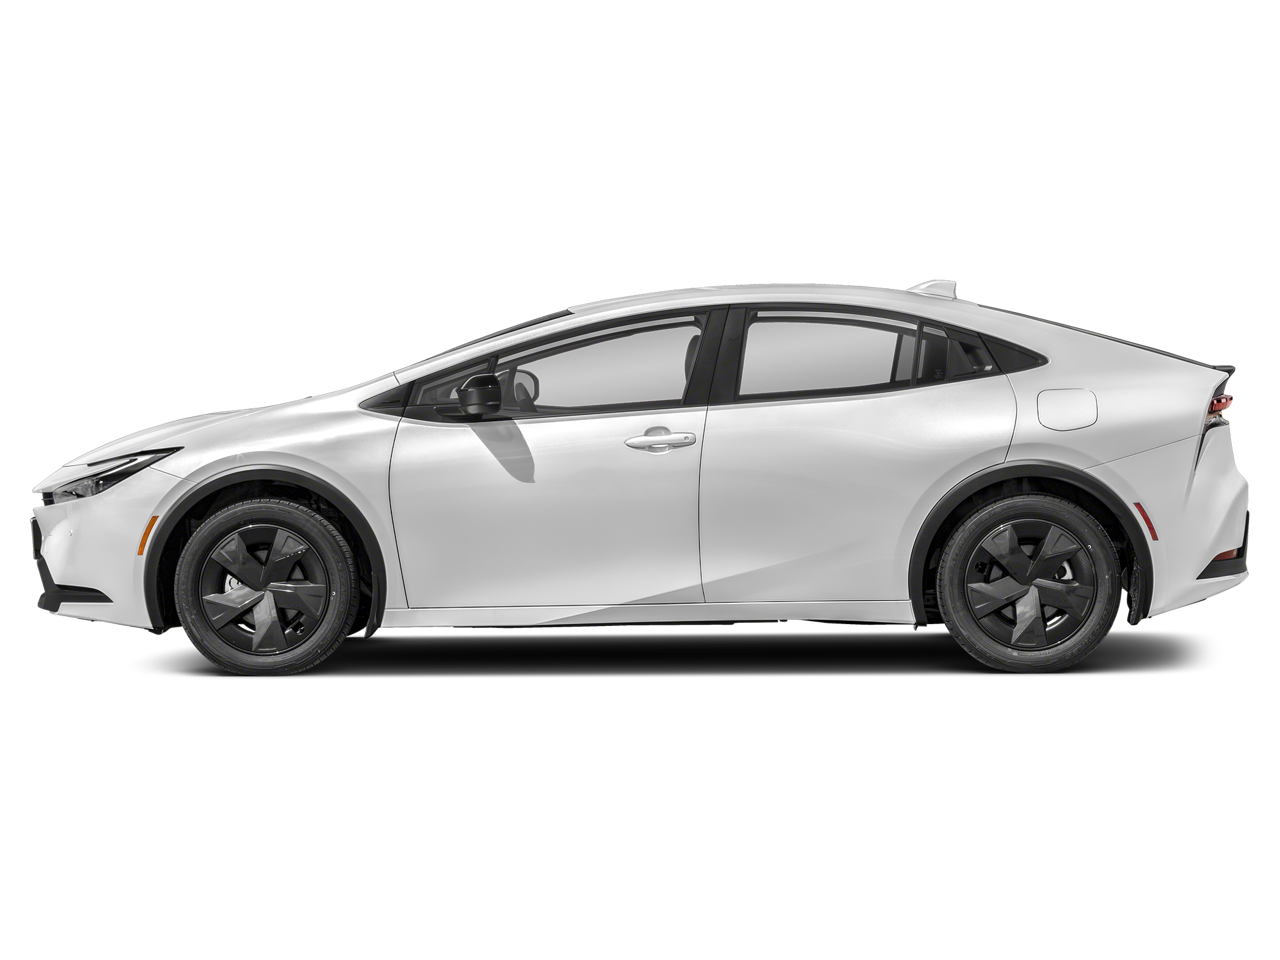 Toyota Prius exterior - Side Profile